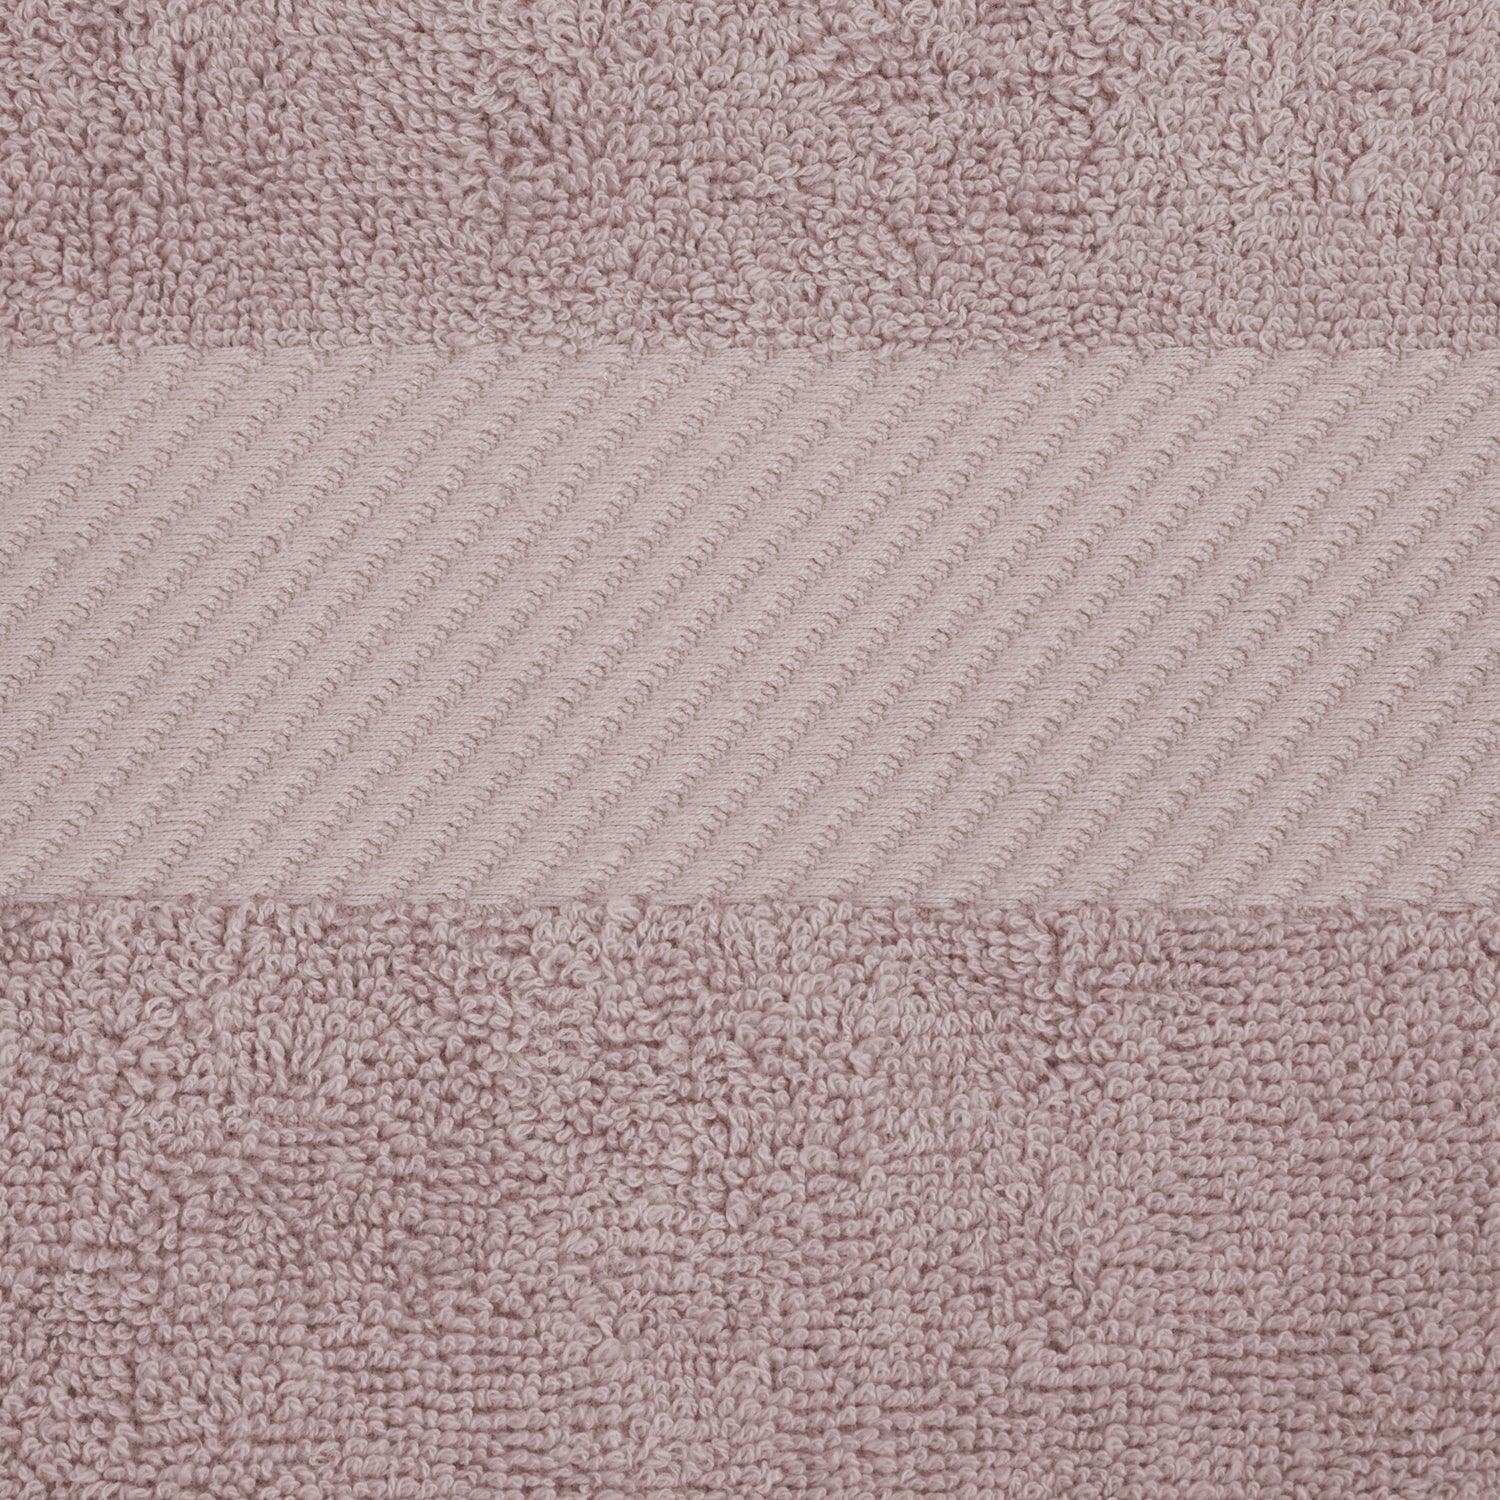 Egyptian Cotton Dobby Border Medium Weight 2 Piece Bath Sheet Set - Fawn